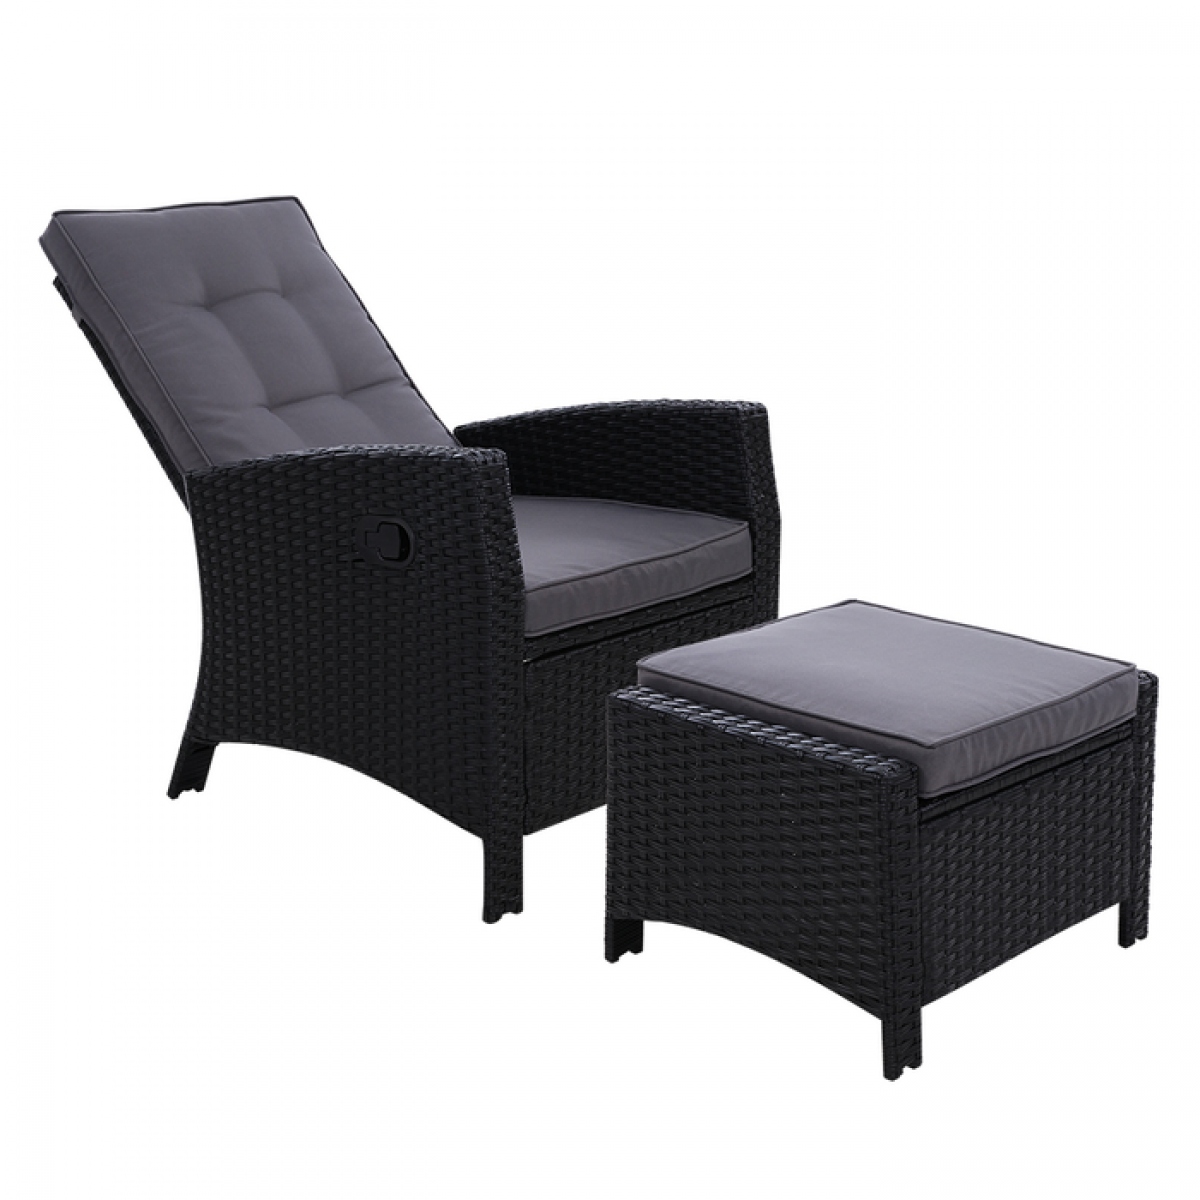 Gardeon Wicker Outdoor Recliner Chair Sun lounge with Ottoman - Black